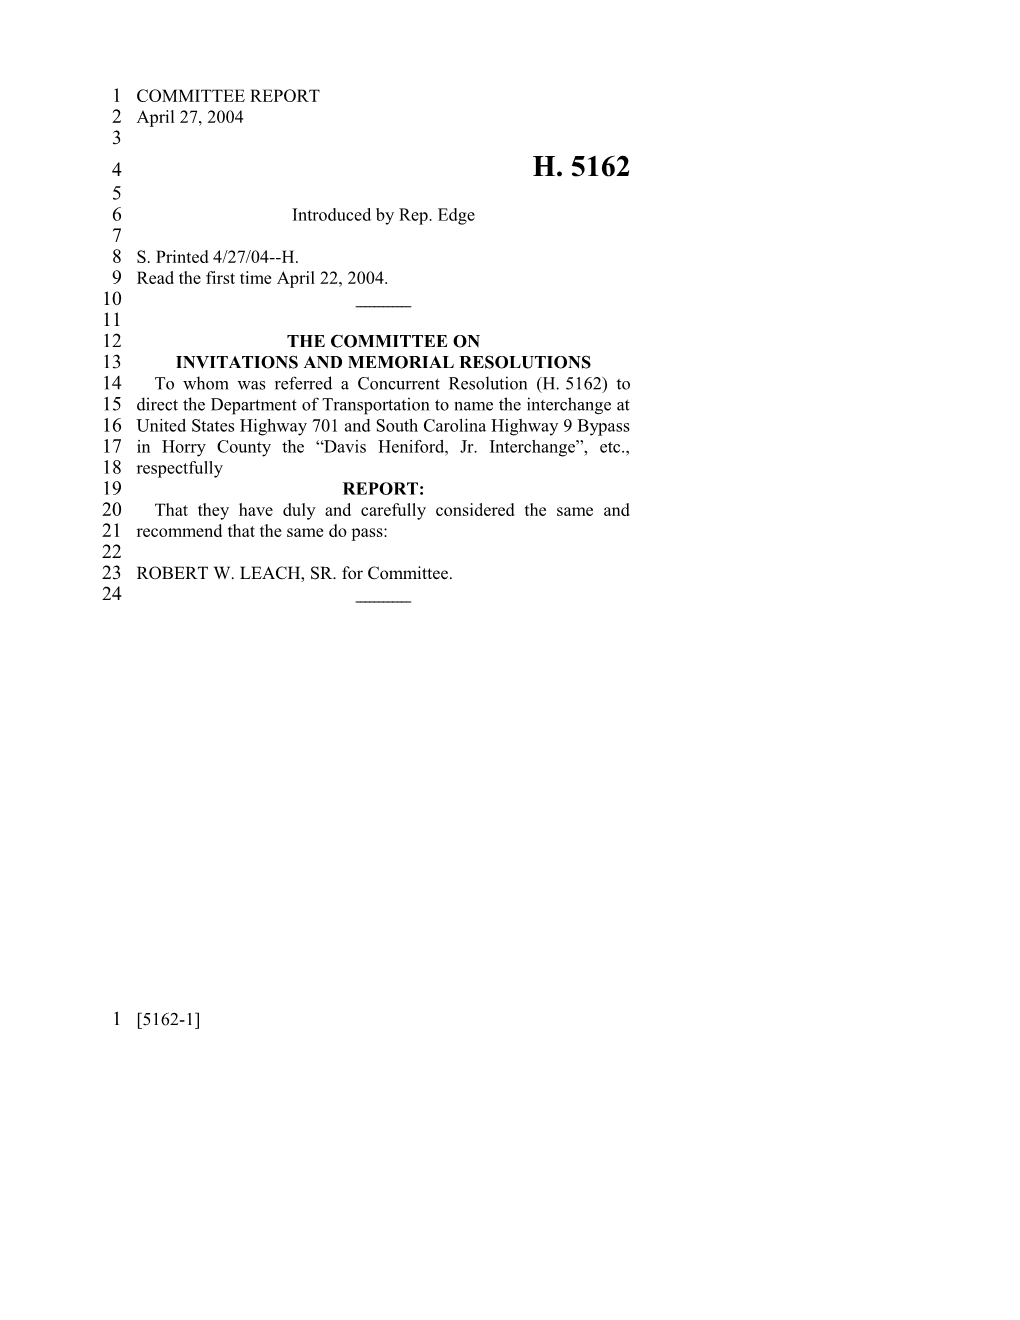 2003-2004 Bill 5162: Horry County, Davis Heniford, Jr. Interchange - South Carolina Legislature